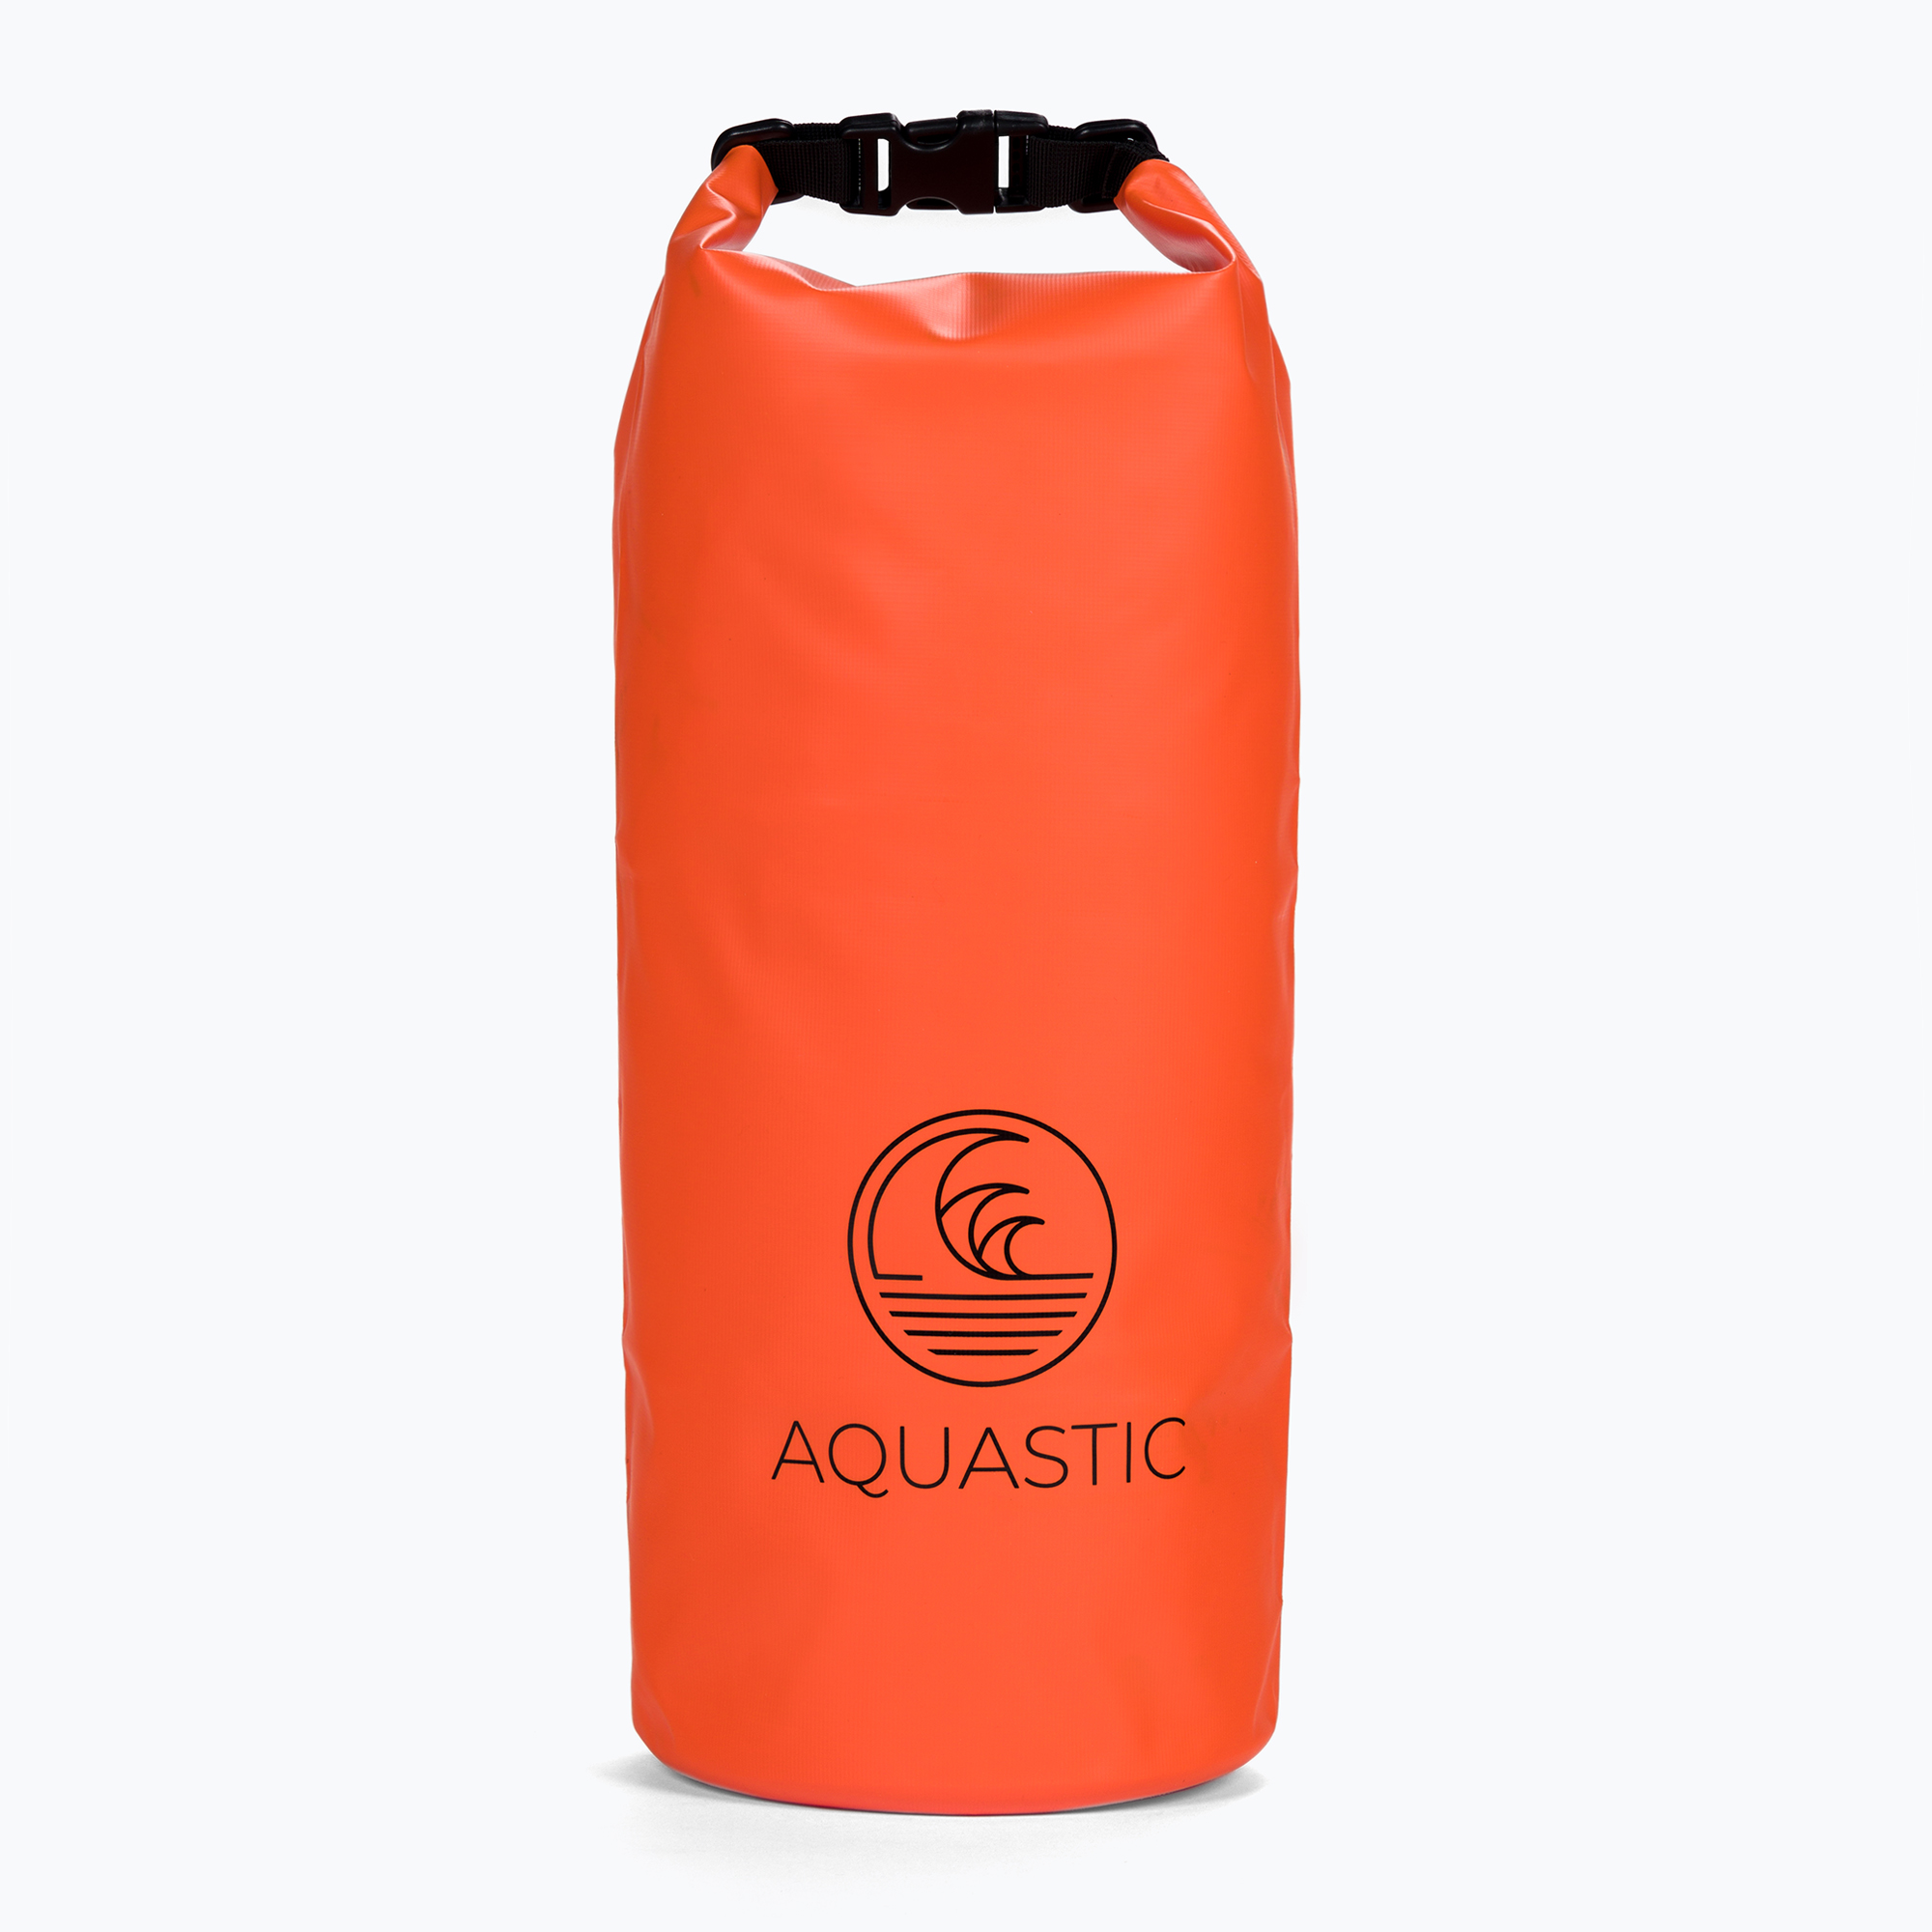 AQUASTIC WB10 10L sac impermeabil portocaliu HT-2225-0